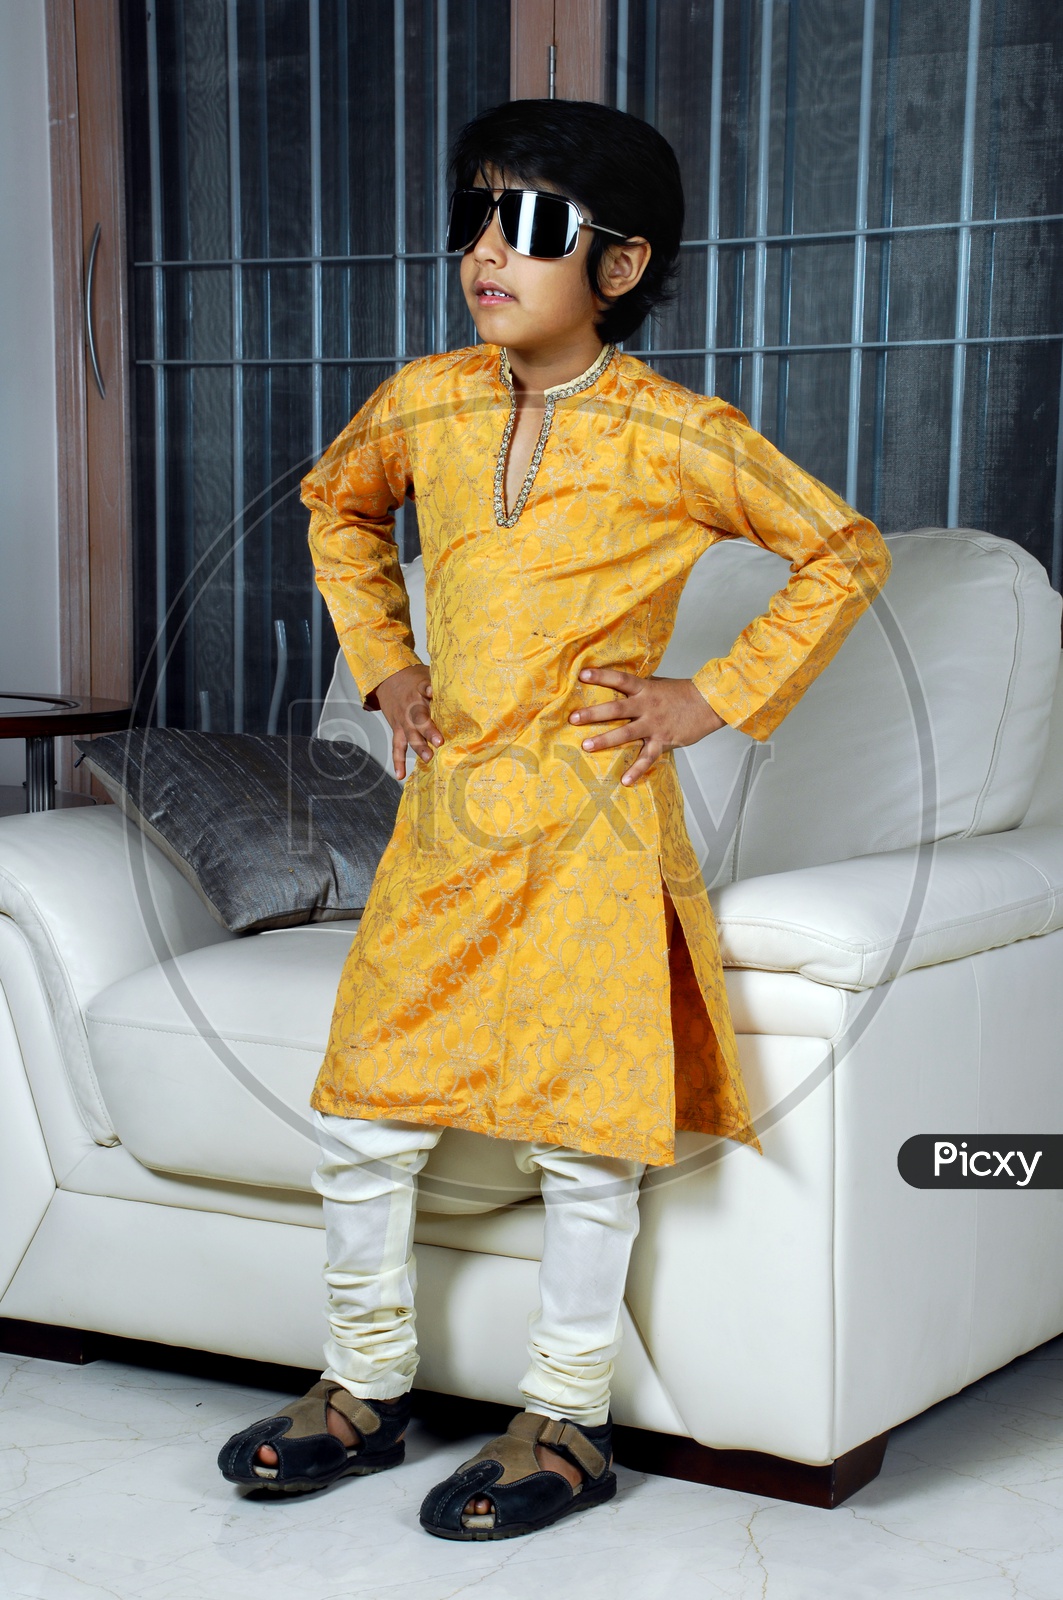 Indian boy wearing yellow kurta pyjama and sunglasses